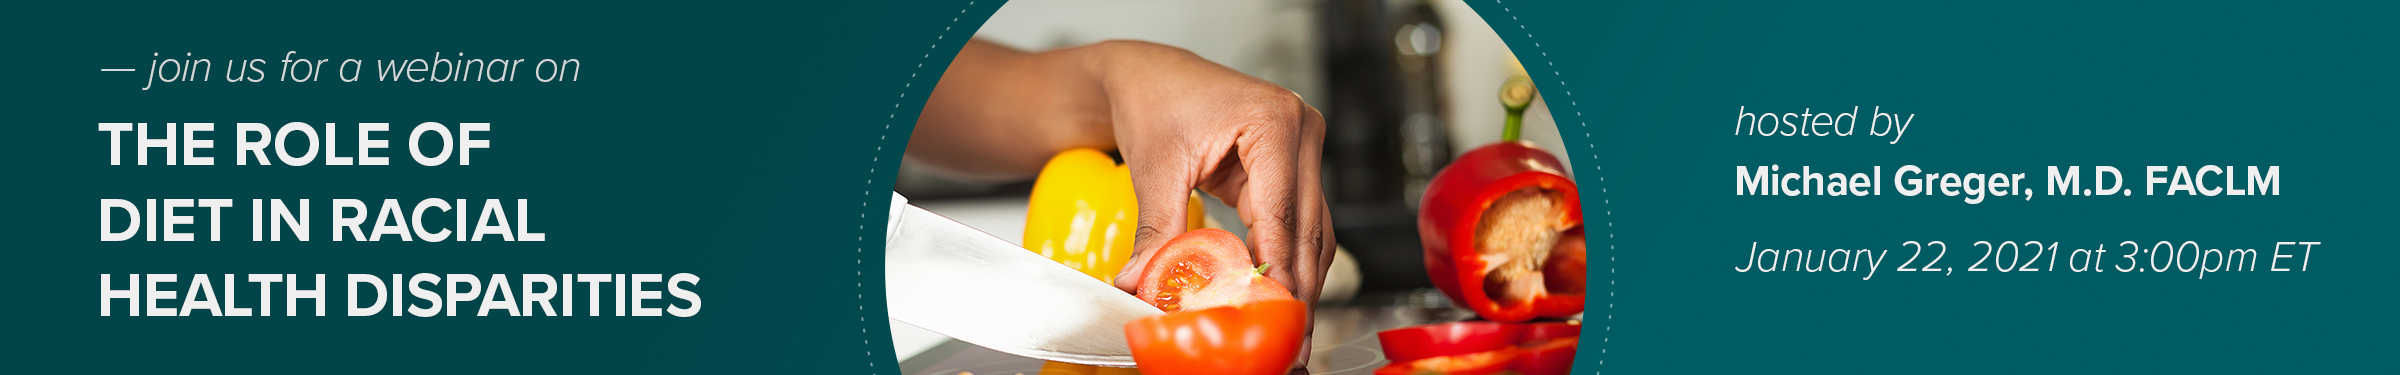 The Role of Diet in Racial Health Disparities